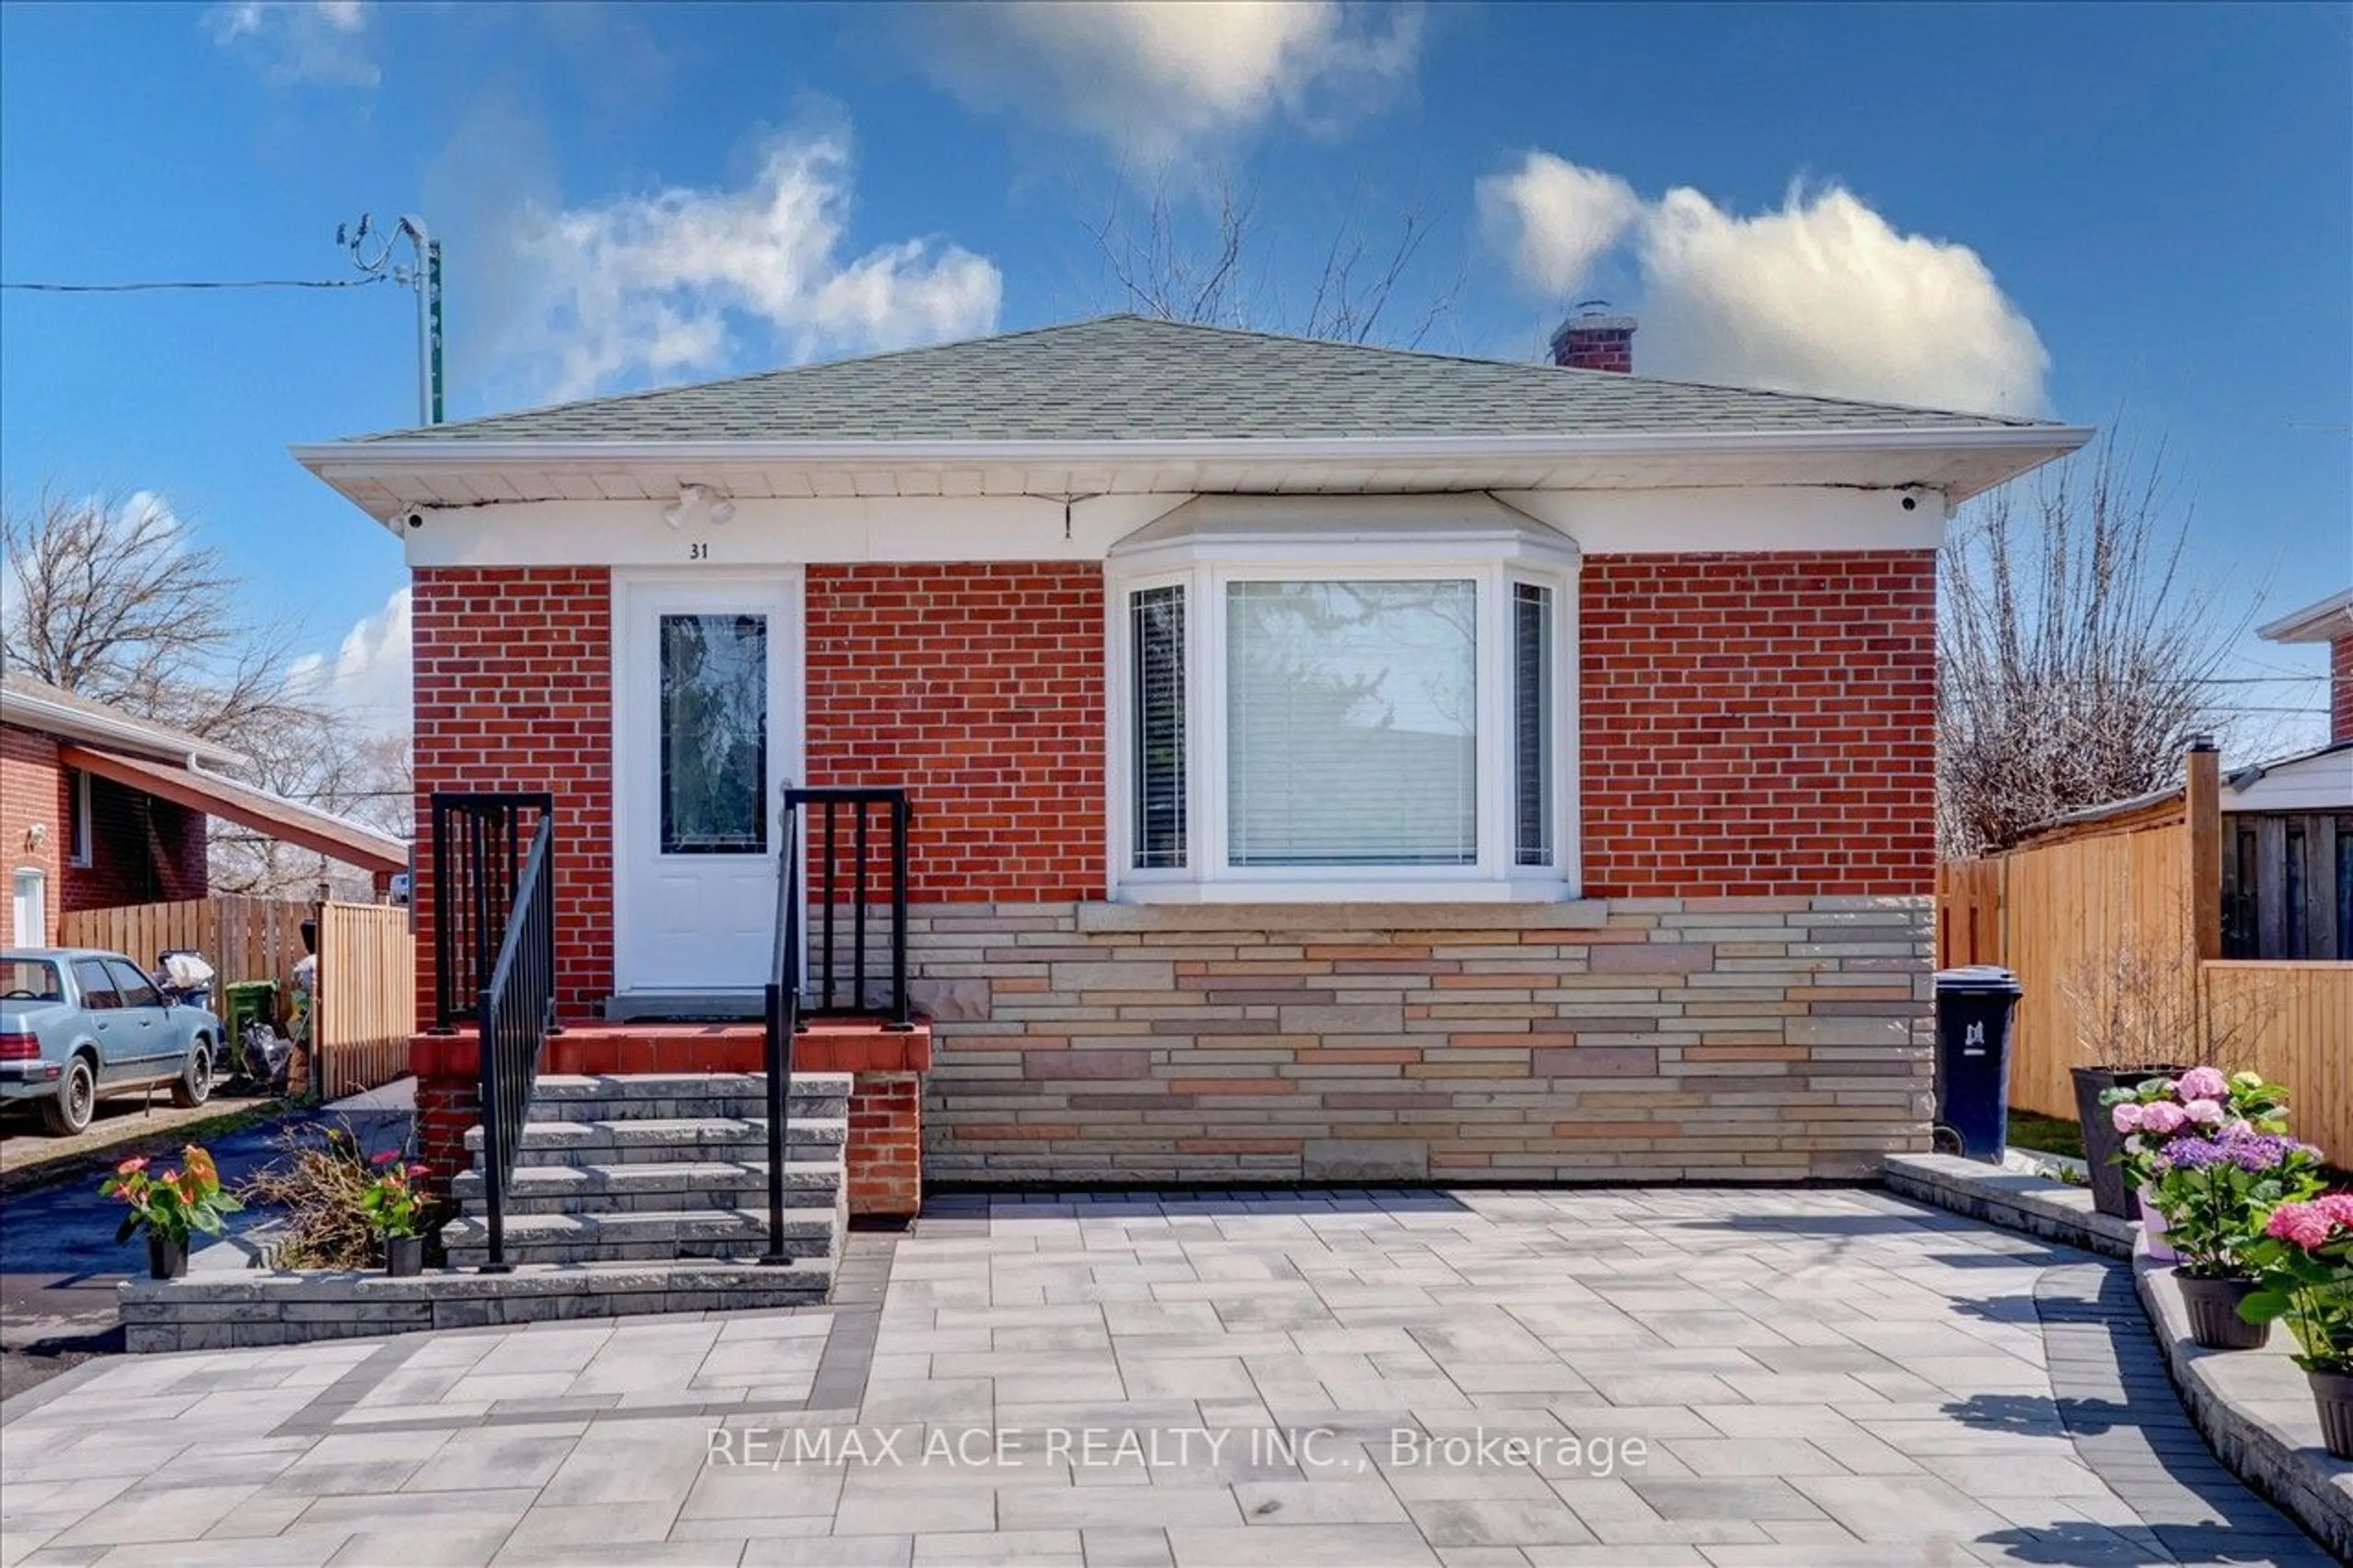 Home with brick exterior material for 31 Benlight Cres, Toronto Ontario M1H 1P4